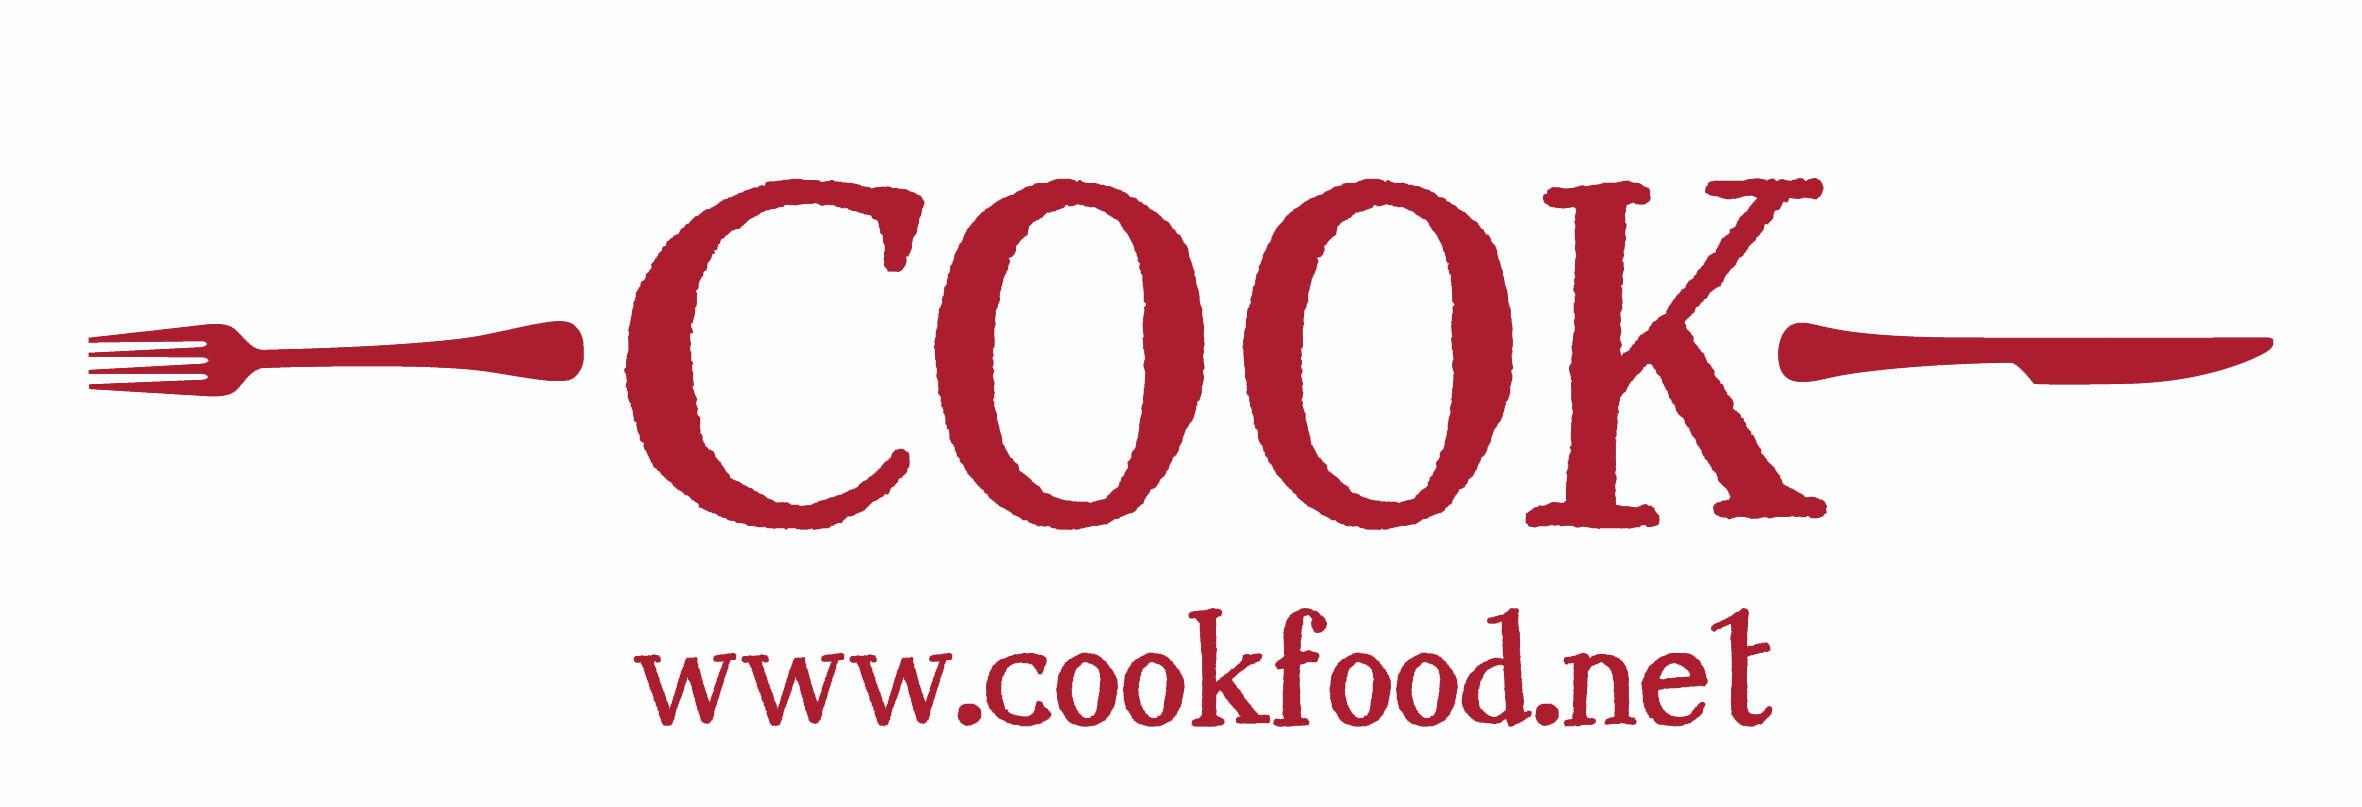 Red Food Logo - cook-food-logo - FoodCycle